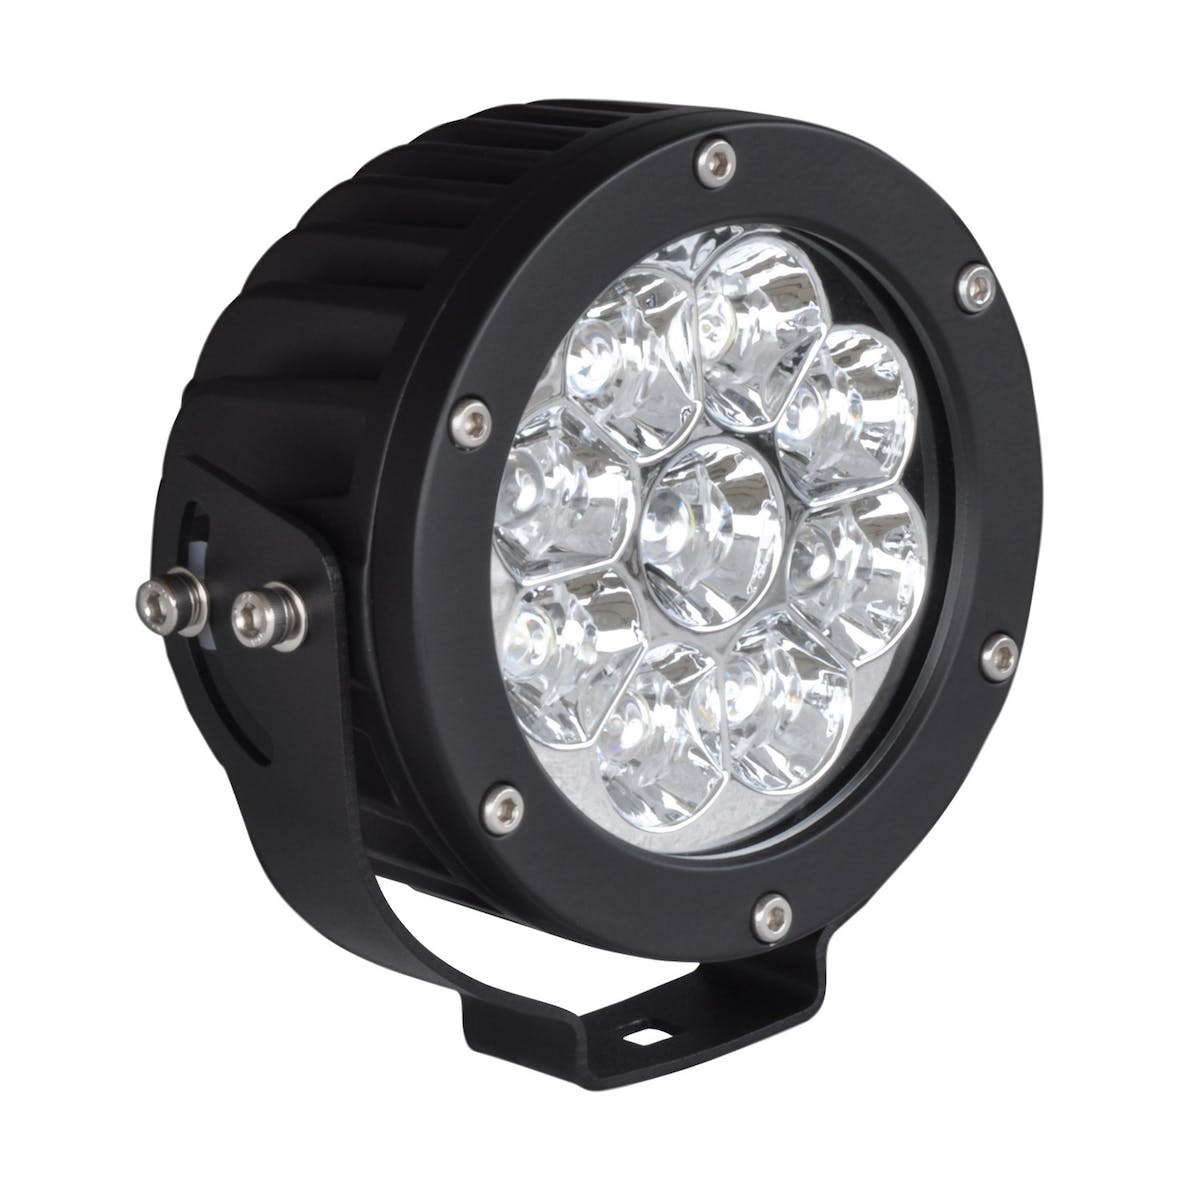 CSI Accessories W4890 4.75" Round High Performance LED Spot Light